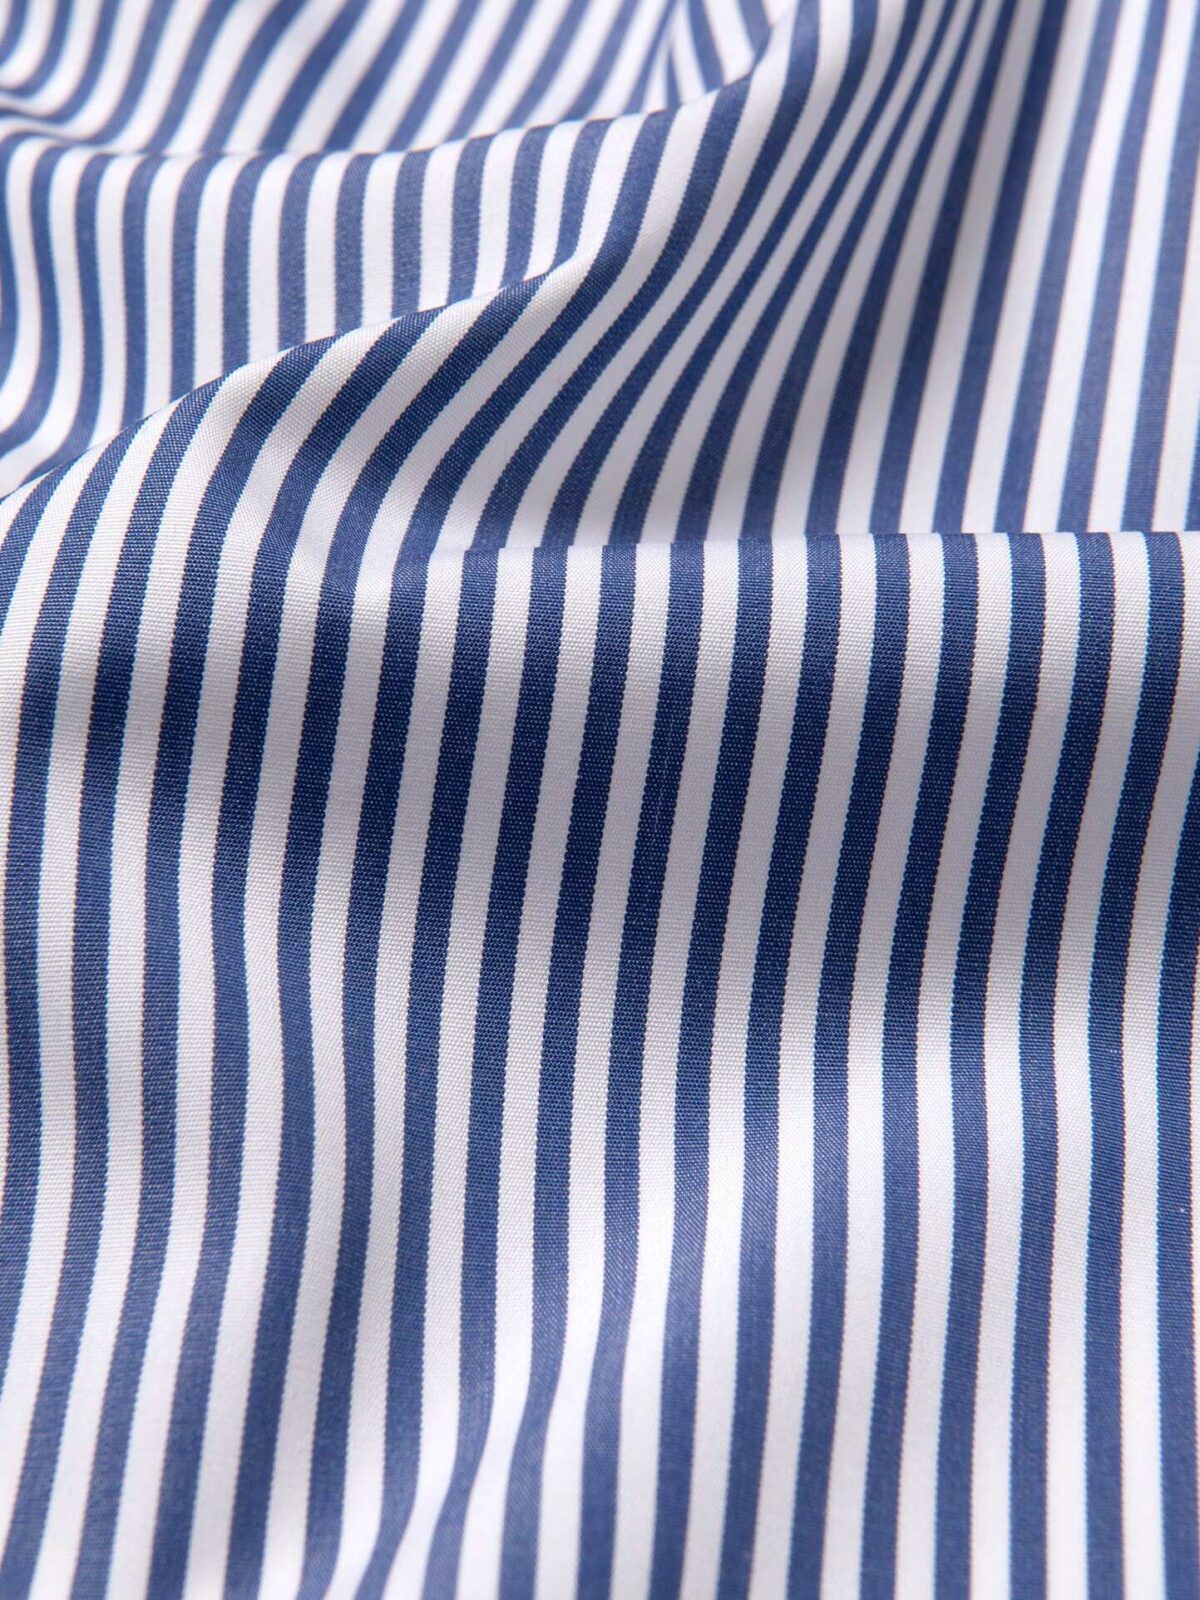 Stanton 120s Navy Bengal Stripe Shirts by Proper Cloth